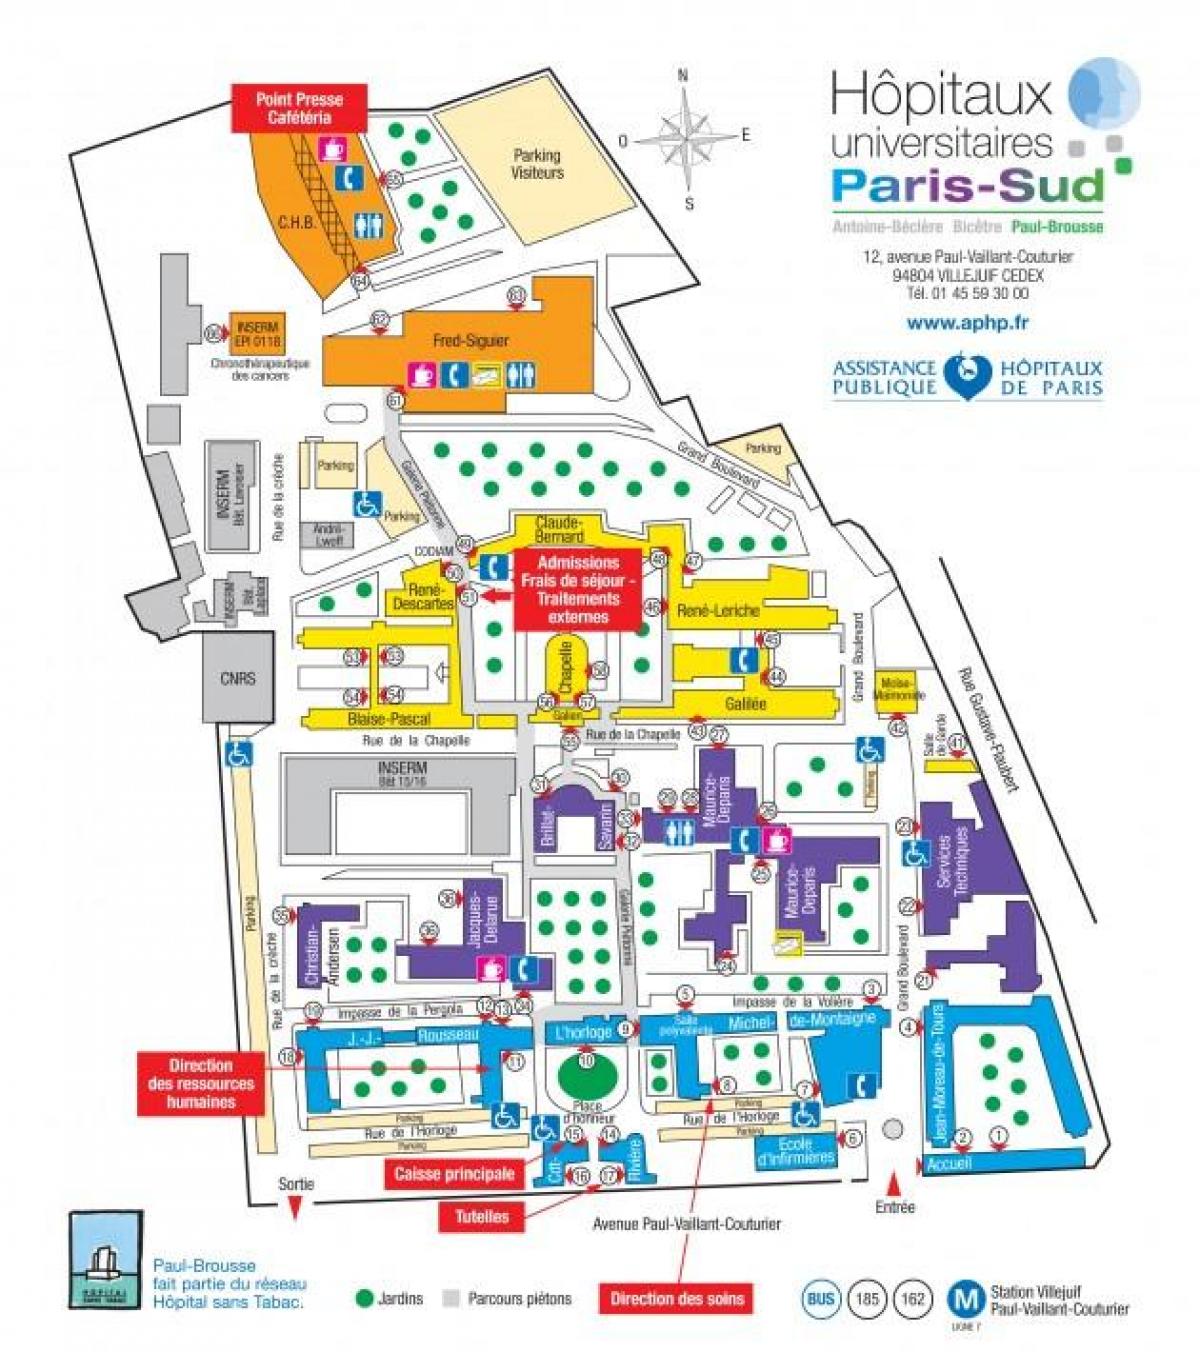 Peta dari Paul-Brousse rumah sakit